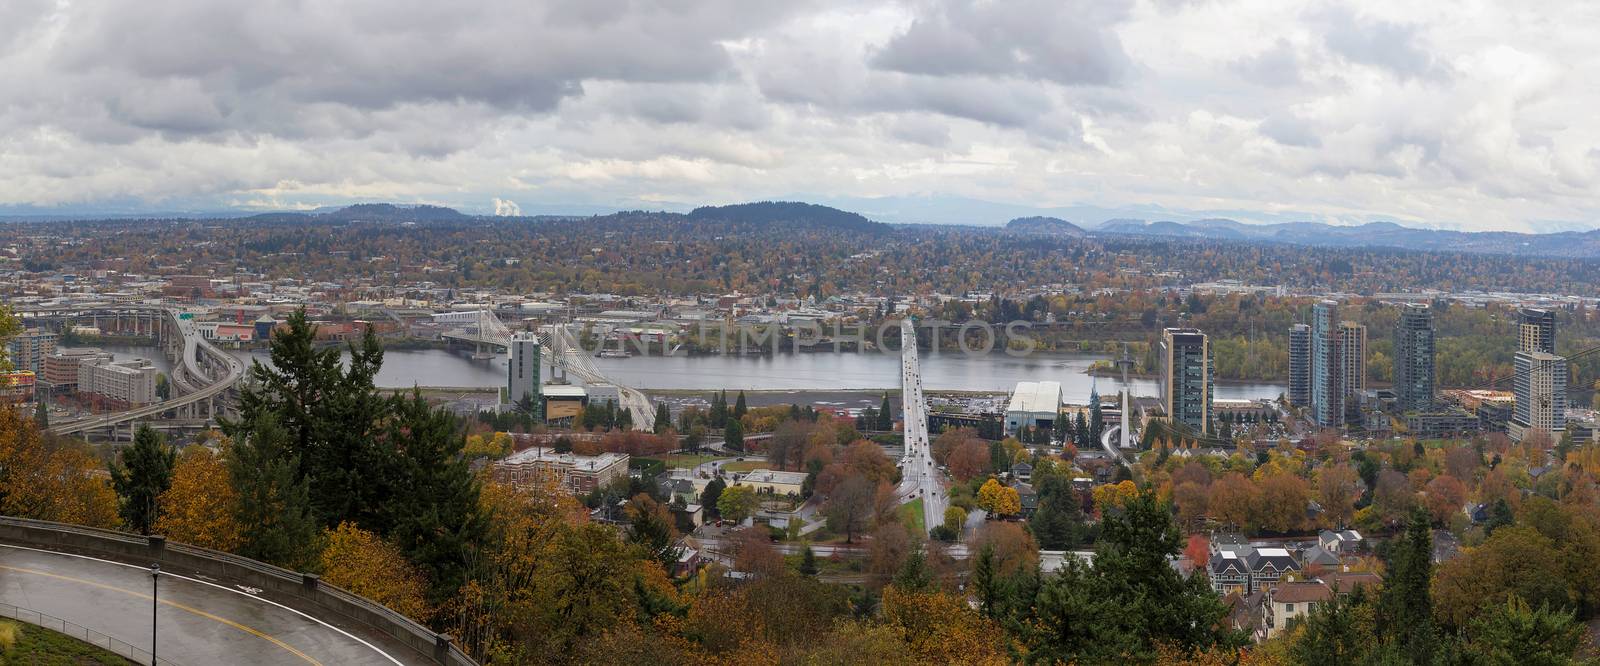 Portland Bridges Over Willamette River by jpldesigns